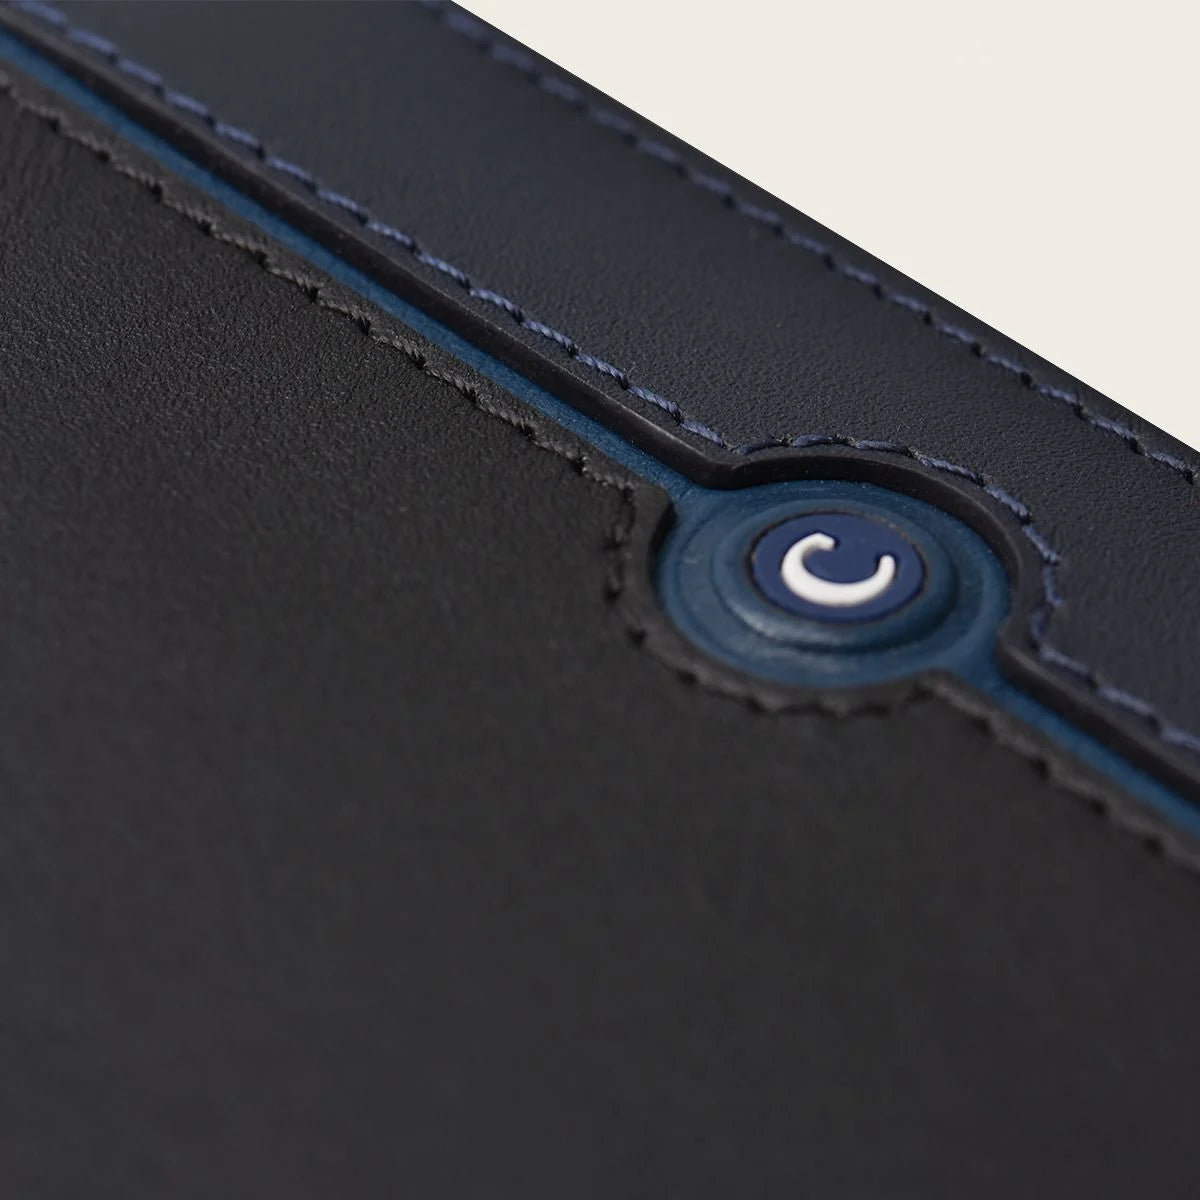 Black bovine leather wallet with Cuadra monogram